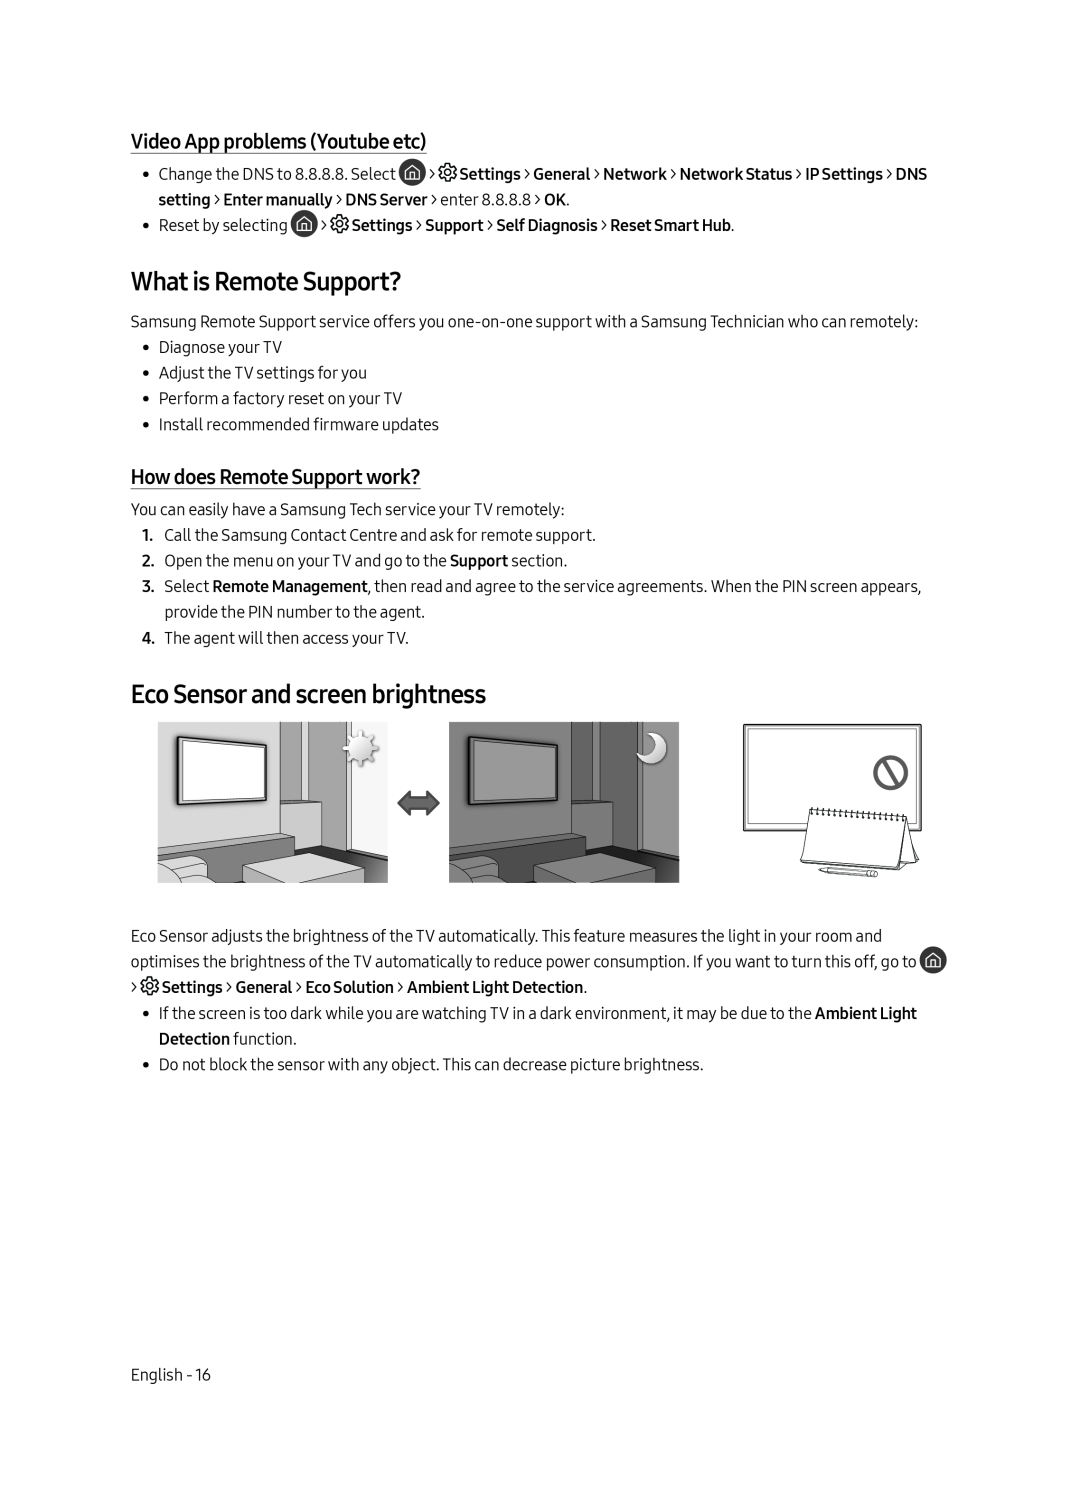 Samsung UE49MU6179UXZG manual What is Remote Support?, Eco Sensor and screen brightness, Video App problems Youtube etc 